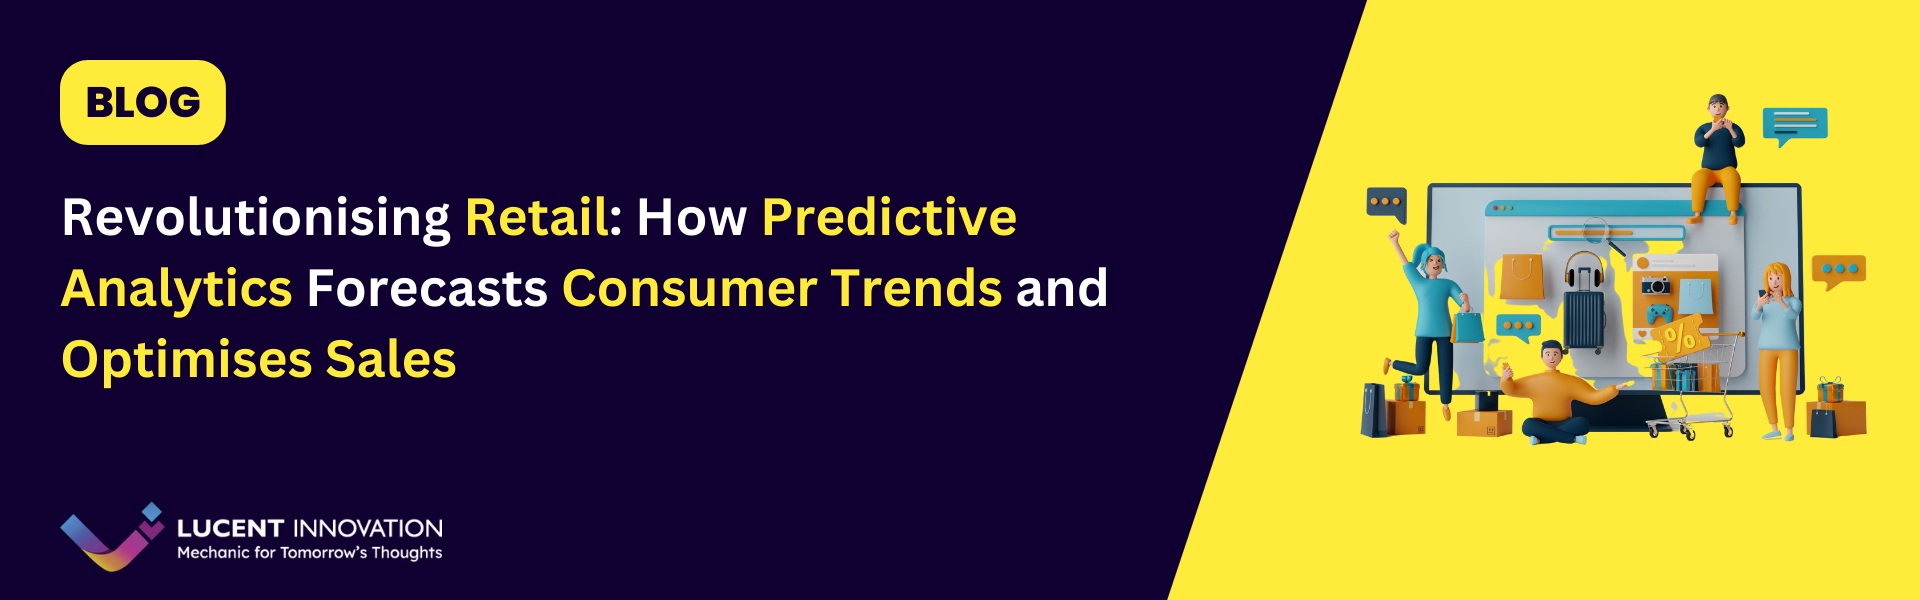 Revolutionising Retail: How Predictive Analytics Forecasts Consumer Trends and Optimises Sales